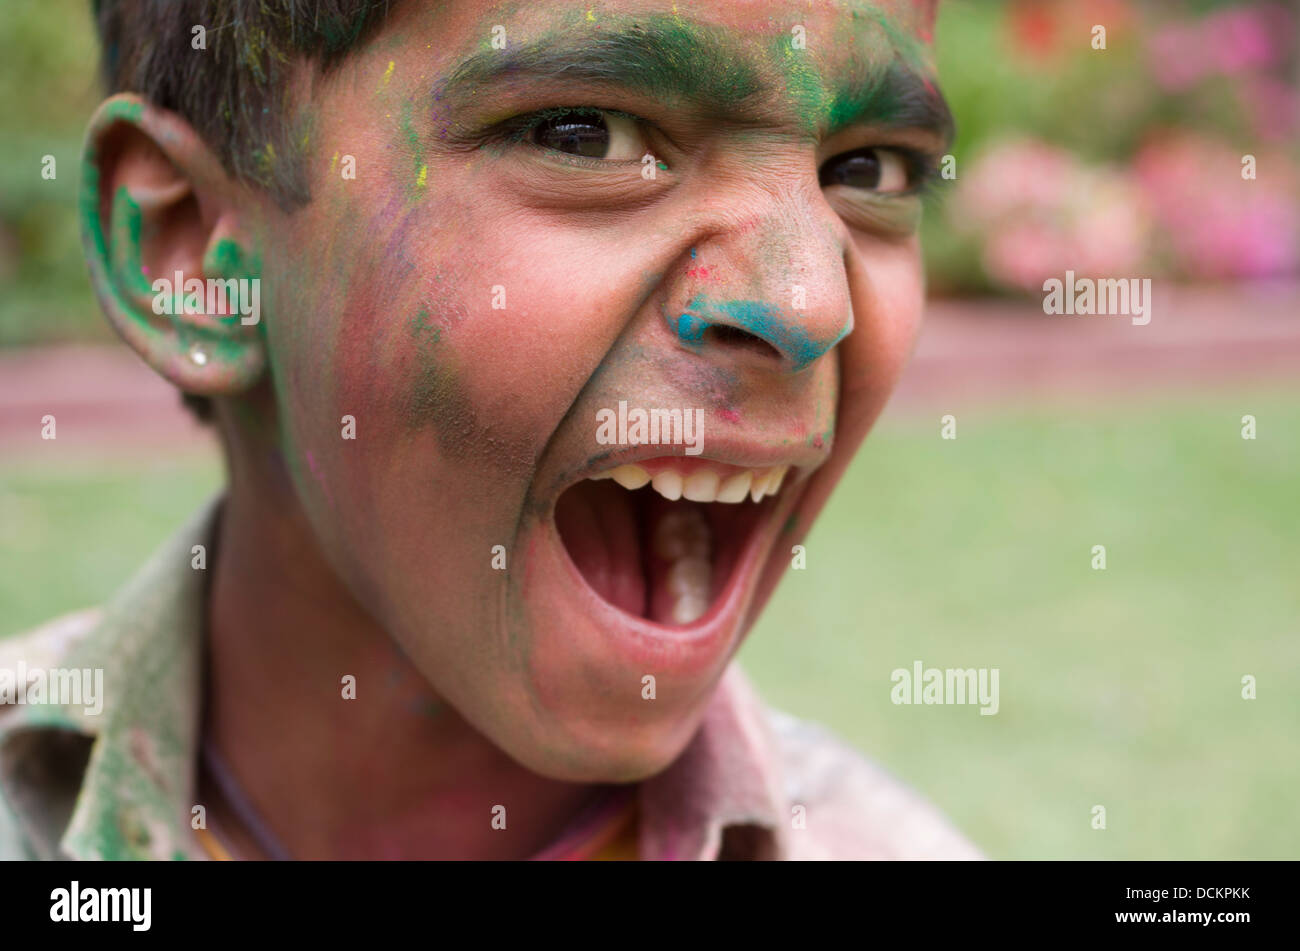 Celebrar Holi, Festival de colores, una primavera festival hindú - Jaipur, Rajasthan, India Foto de stock